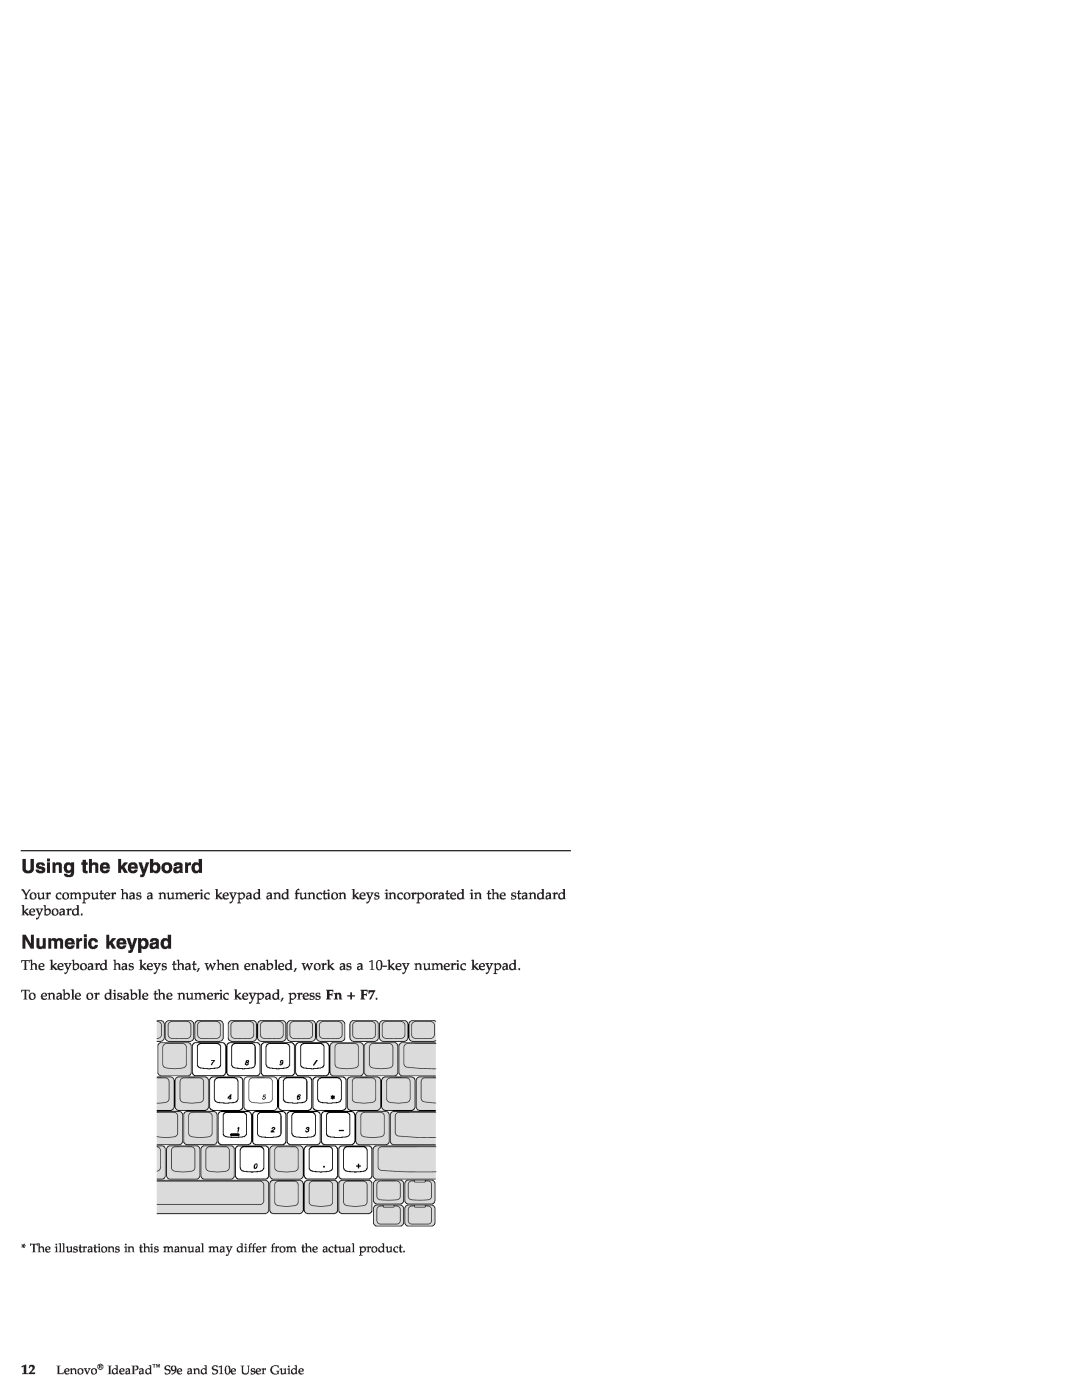 Lenovo S10E, S9E manual Using the keyboard, Numeric keypad 